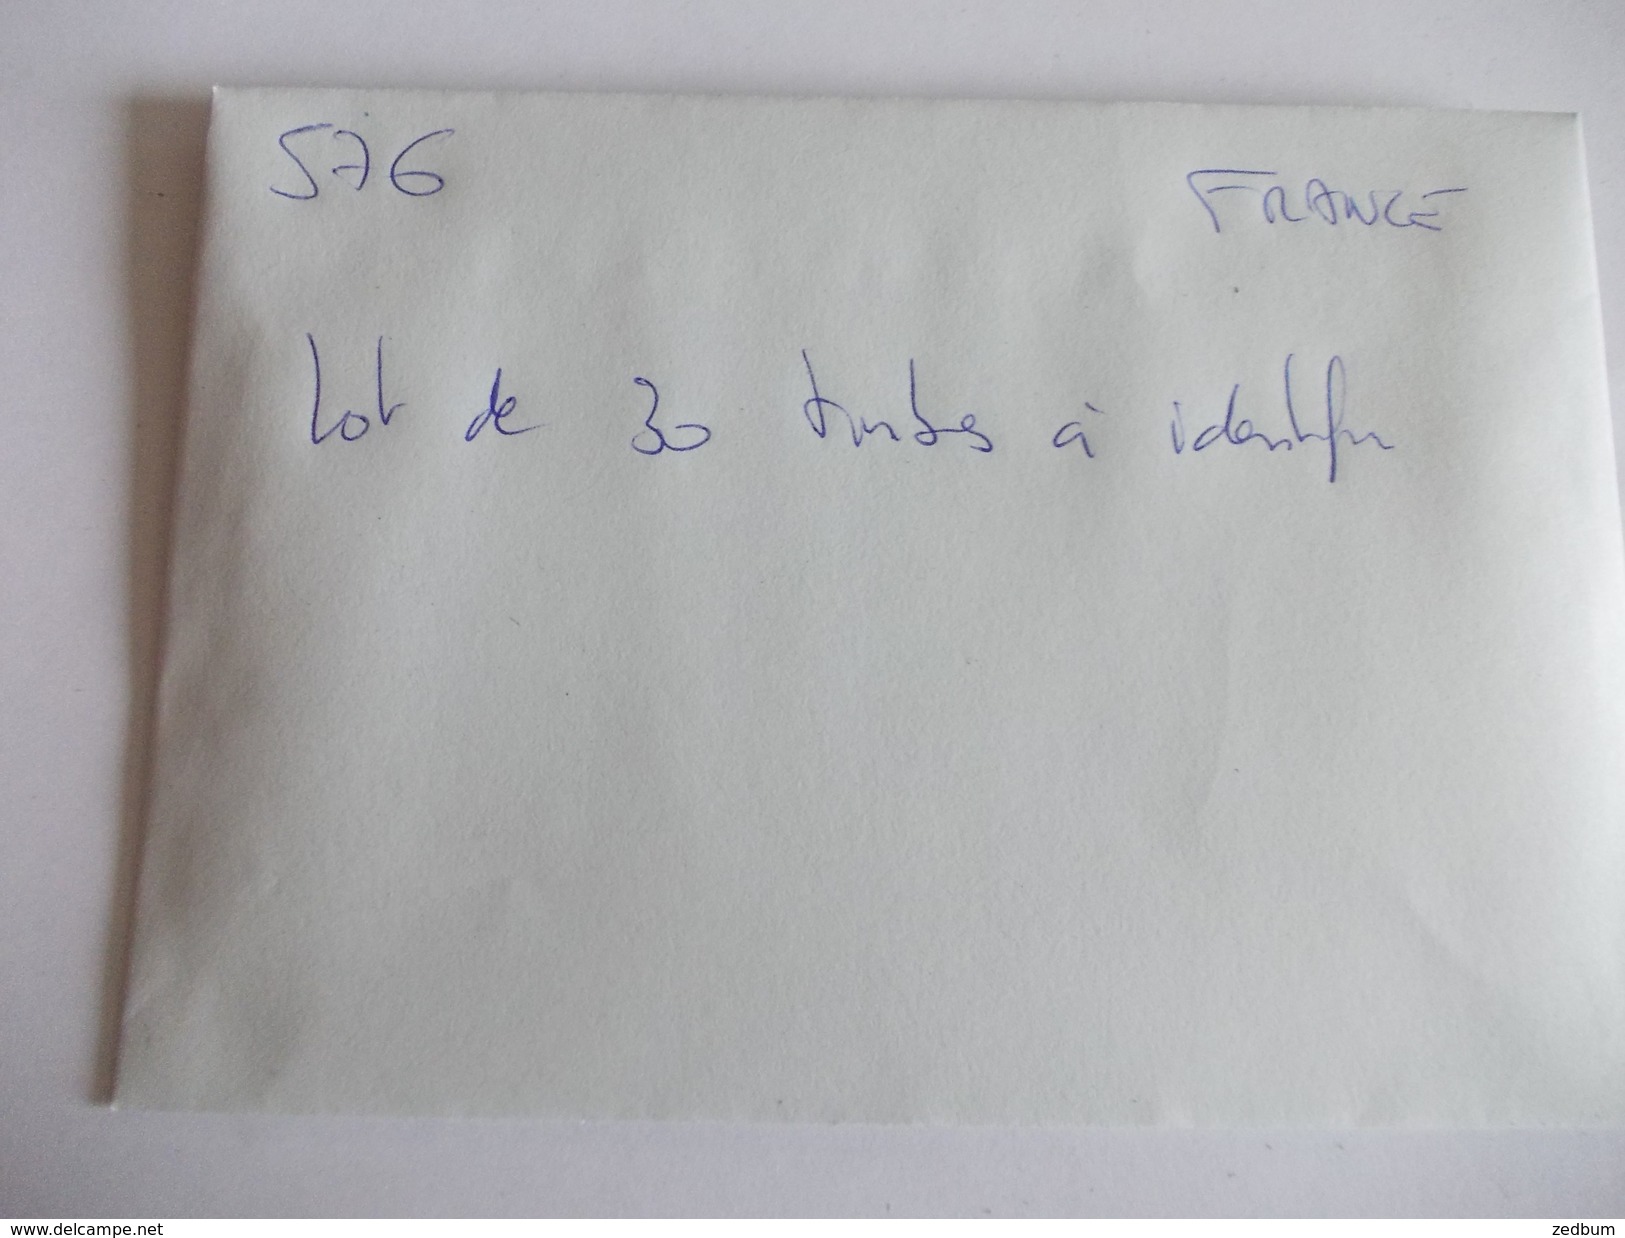 TIMBRE France Lot De 30 Timbres à Identifier N° 576 - Lots & Kiloware (mixtures) - Max. 999 Stamps